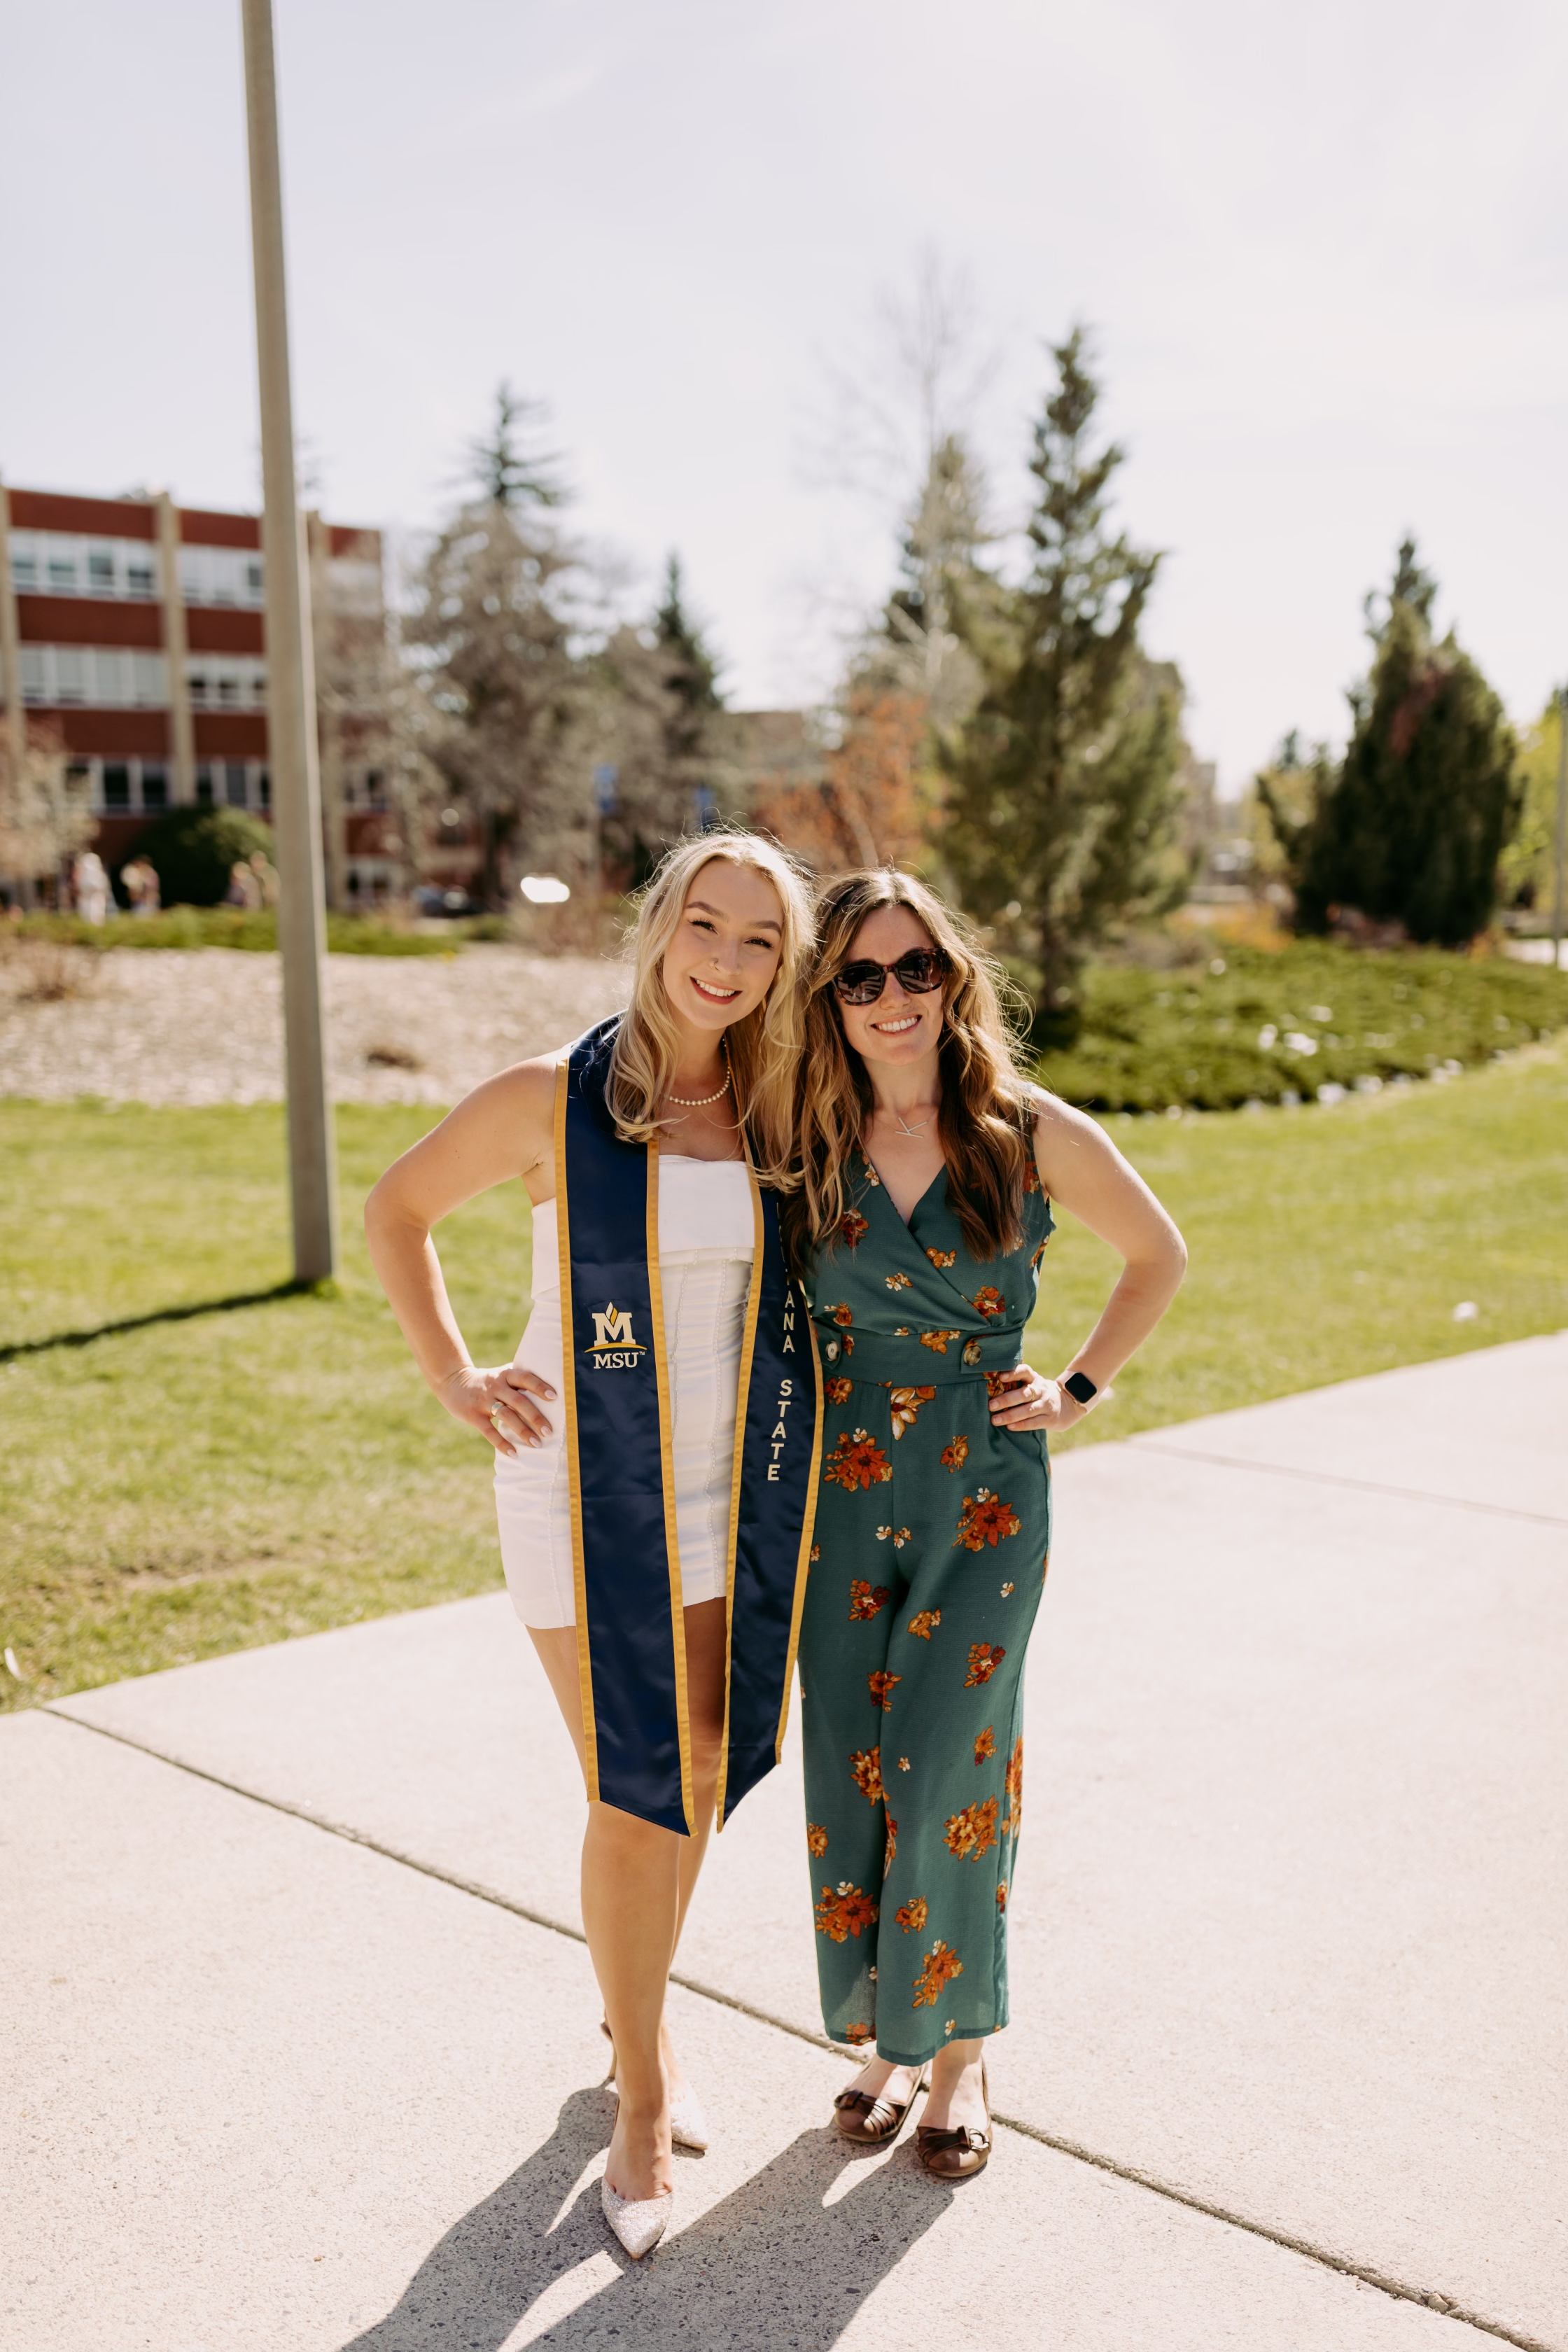 Lexi and Katrina at Lexi's graduation 